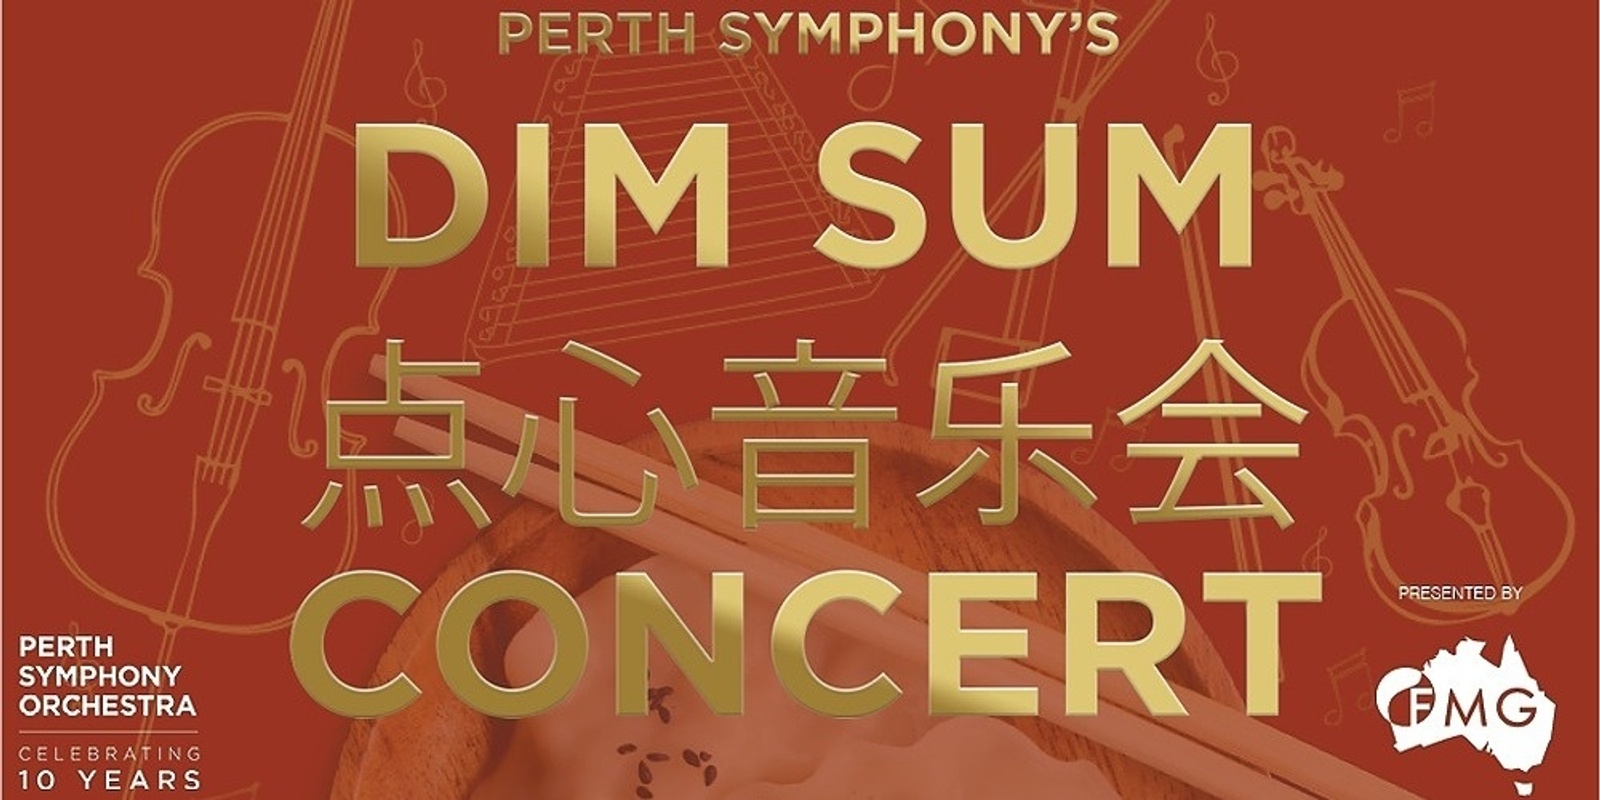 Banner image for Perth Symphony's Dim Sum Concert